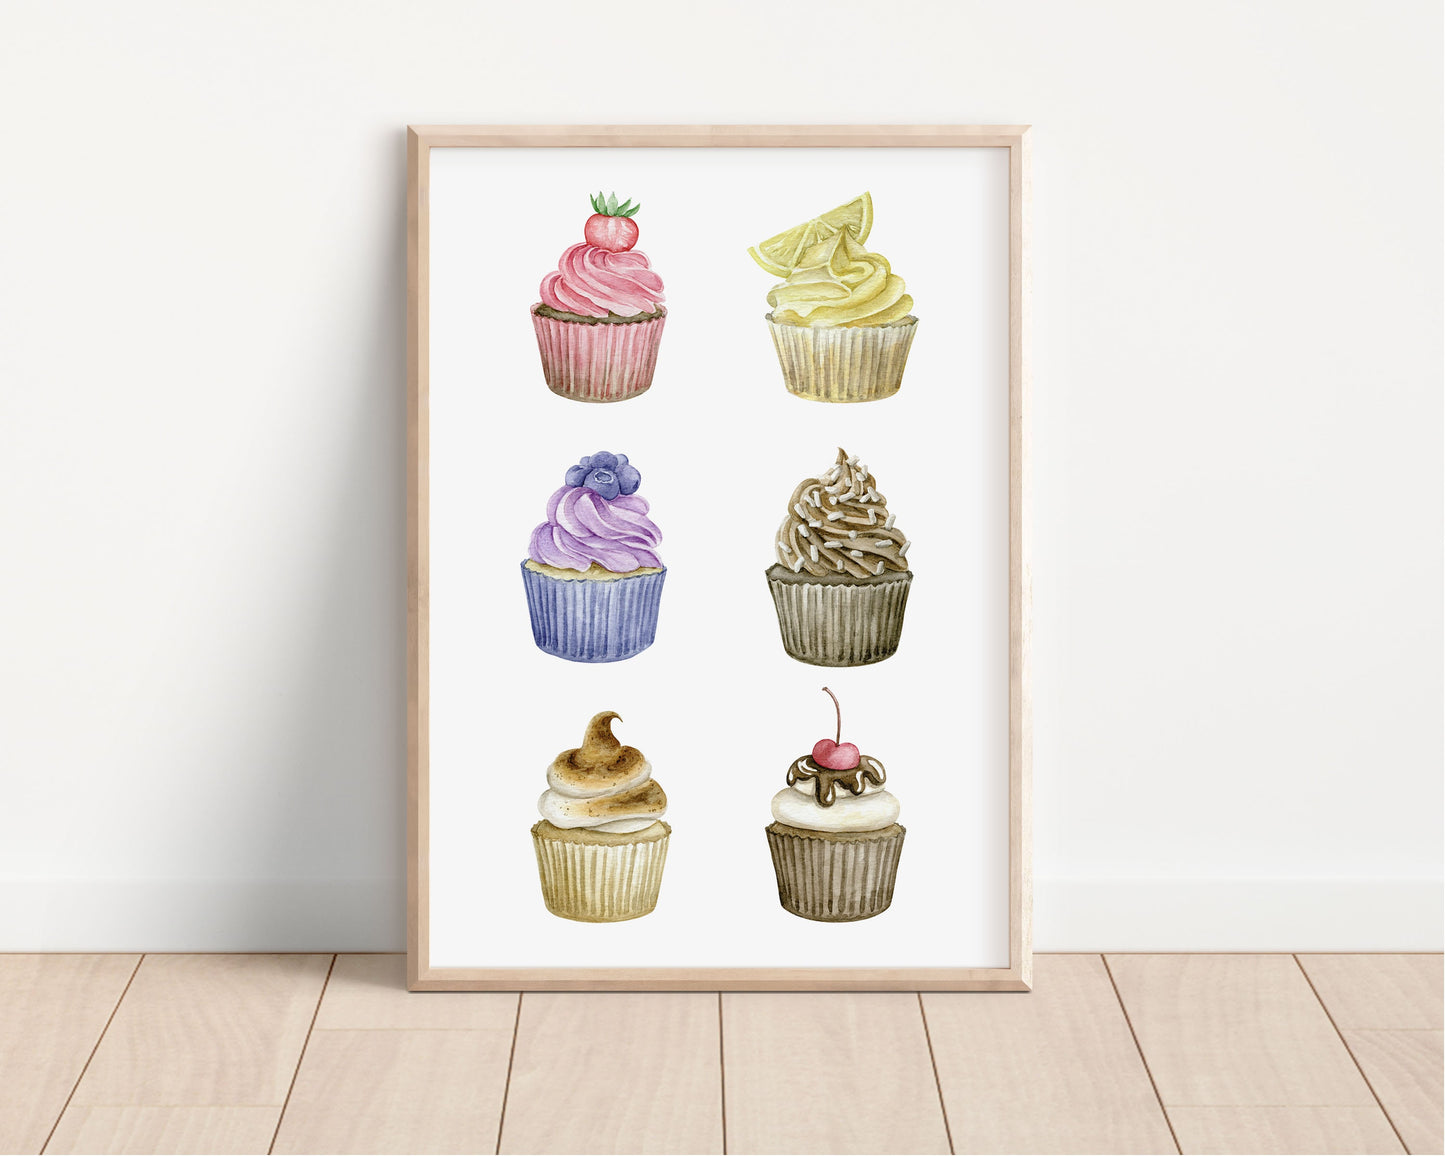 Cupcake Print, Cupcake illustration Print, Watercolour cupcake Print, Food Print, Home Decor, Kitchen Print, Kitchen Decoration, Cupcakes